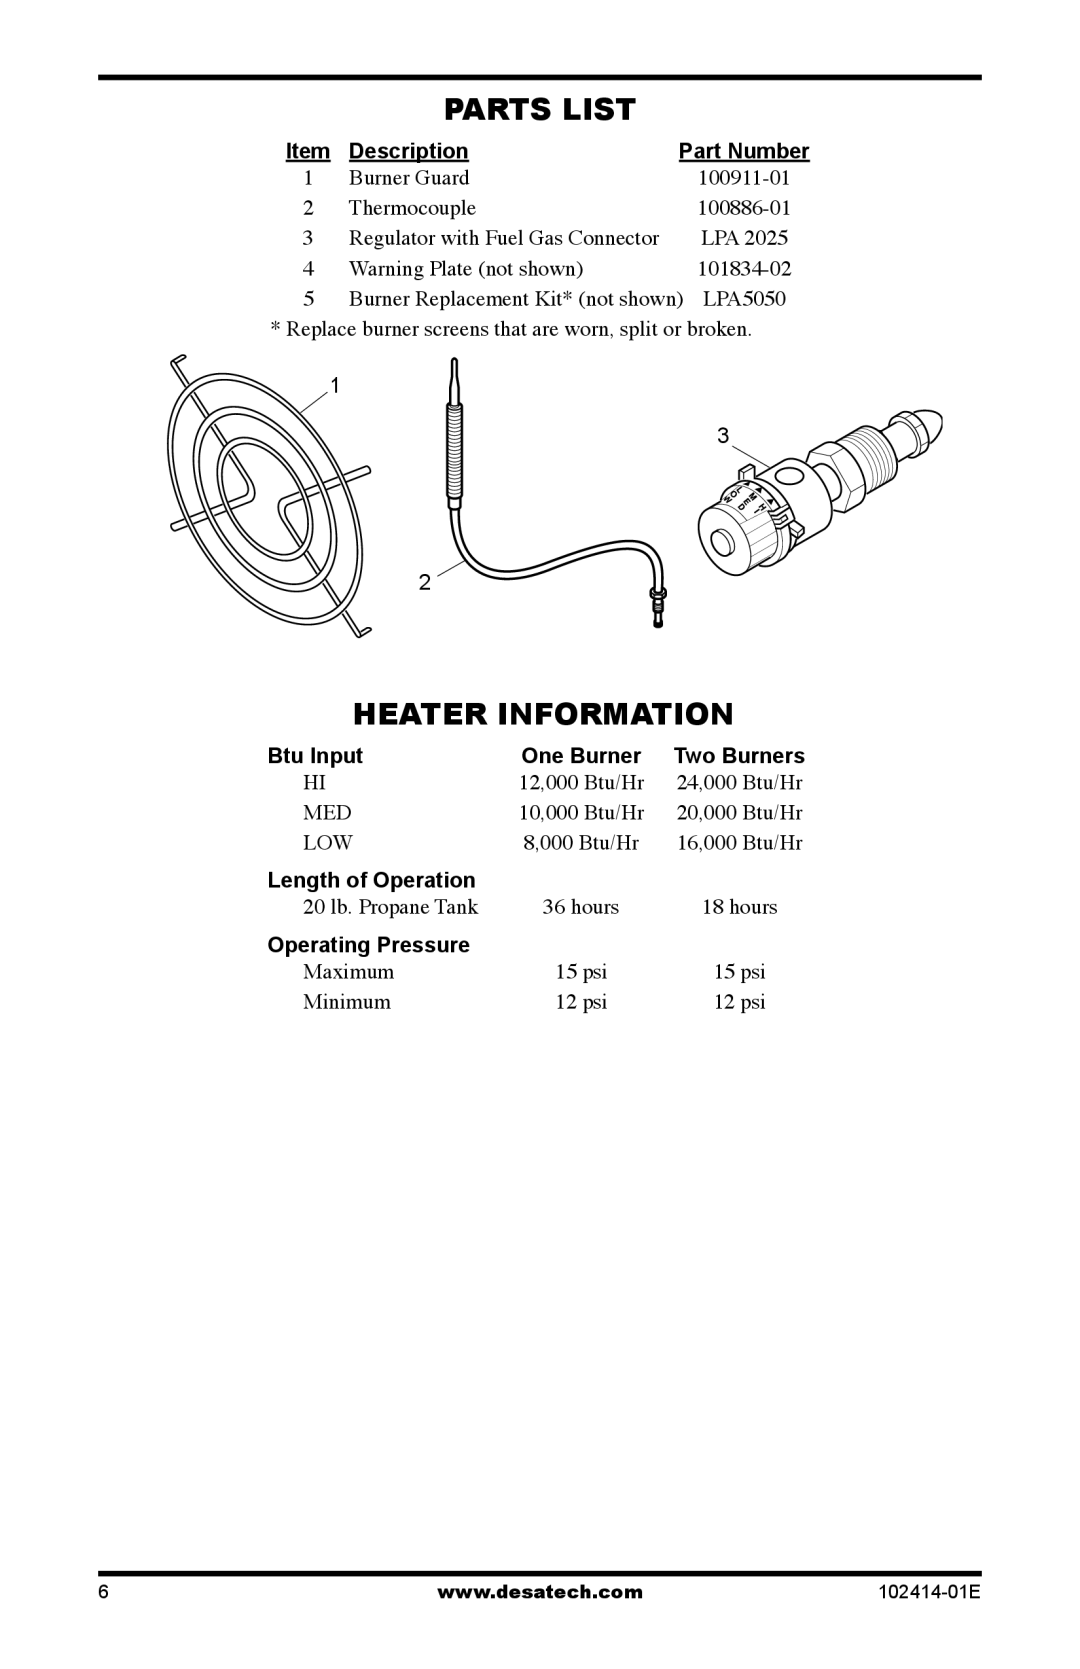 Desa CHD24B, TTC24B Parts List, Heater Information, Description, Btu Input, Length of Operation, Operating Pressure 